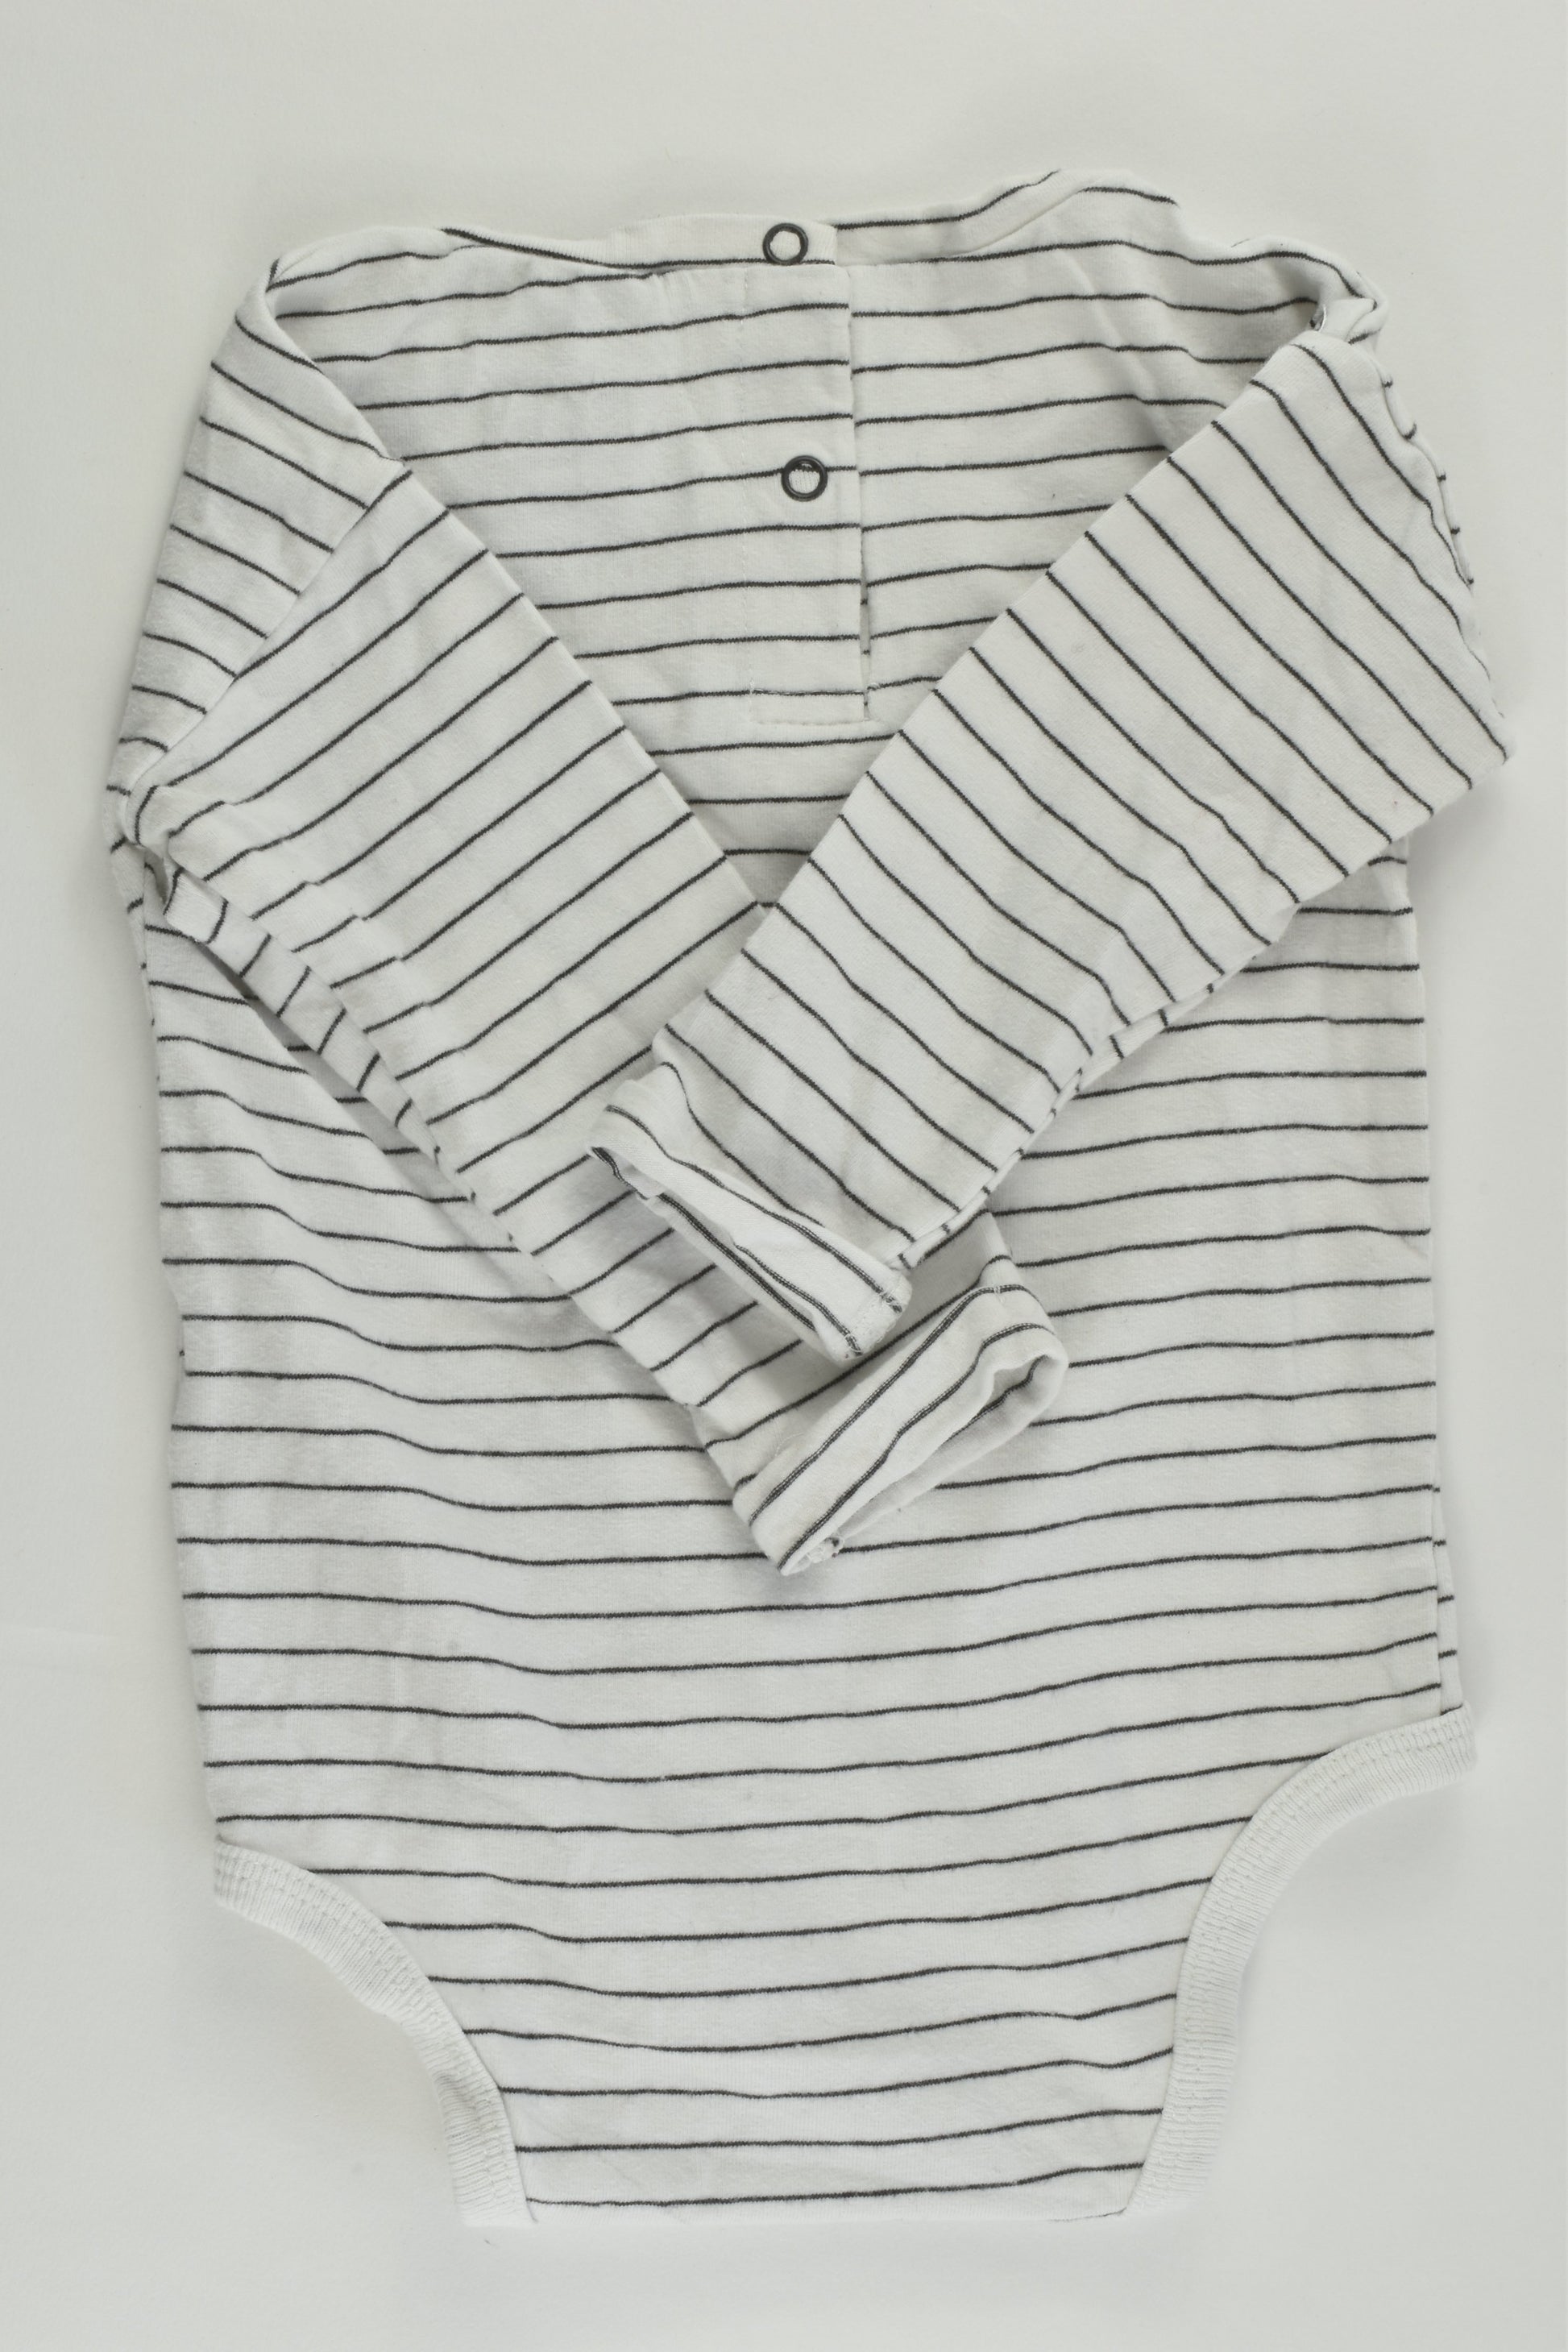 Cotton On Baby Size 1 (12-18 months) Striped Bear Bodysuit